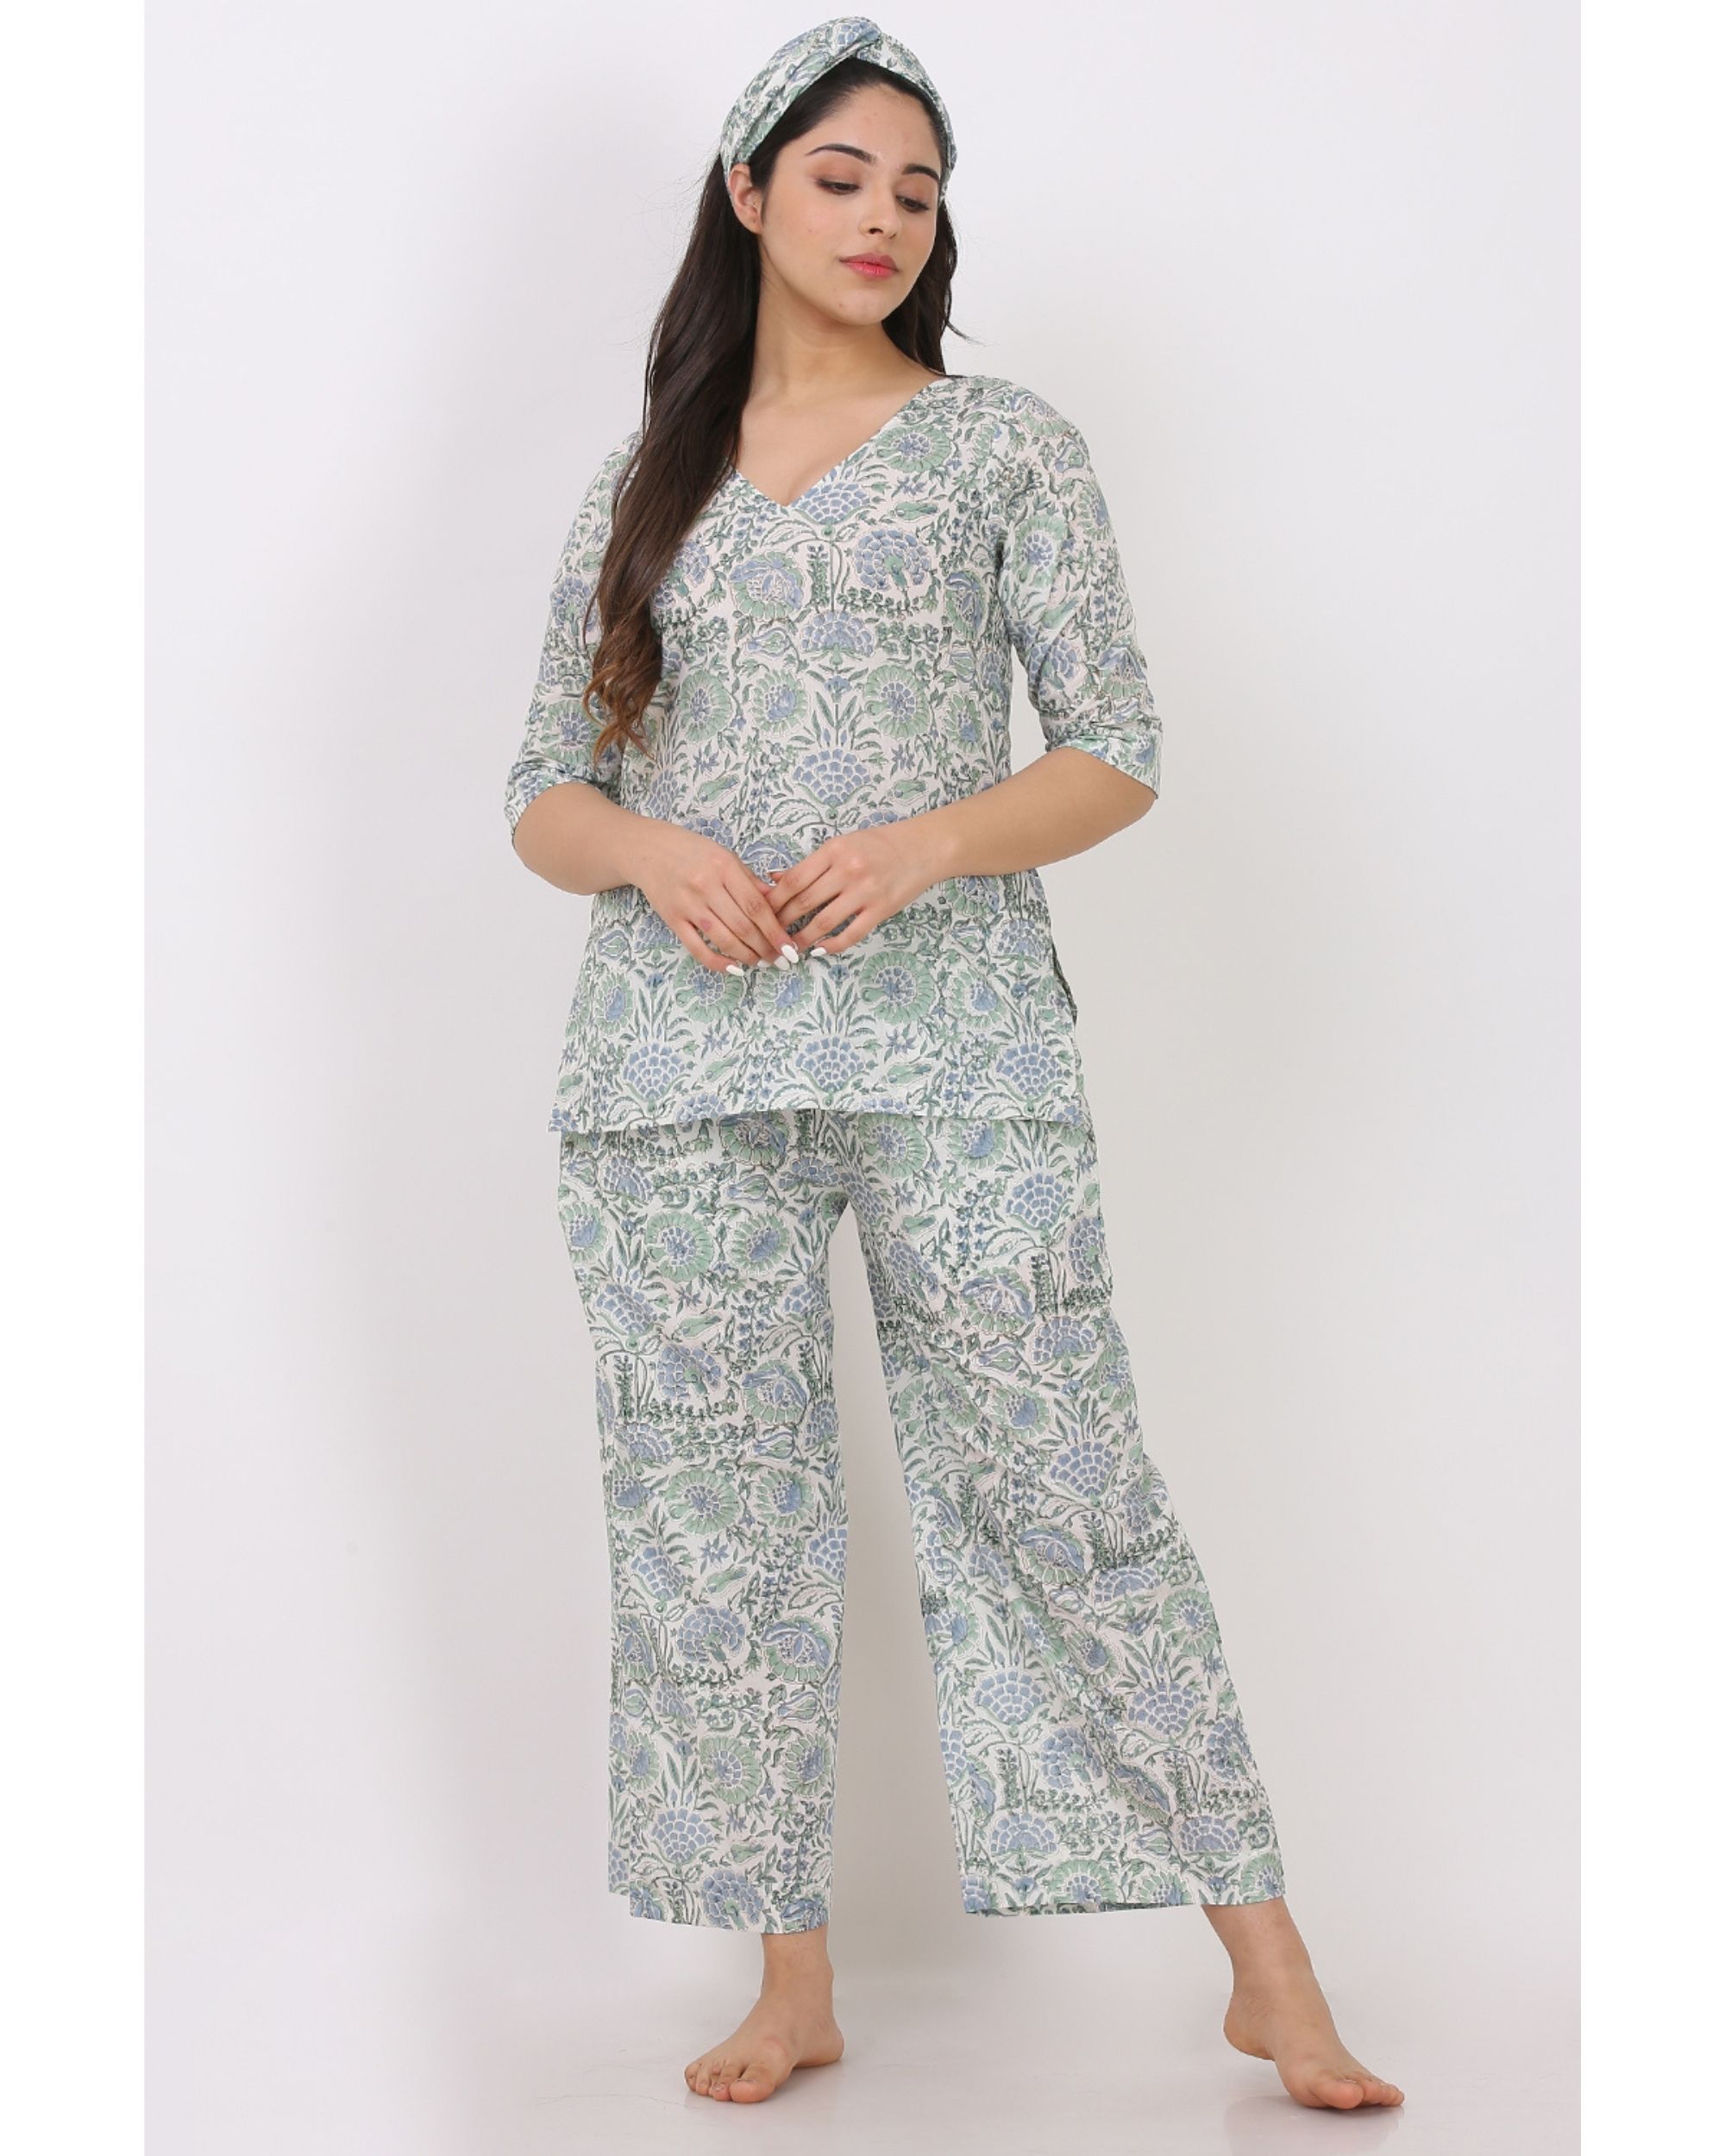 Sky blue short printed kurta and pyjama with hair band - set of three